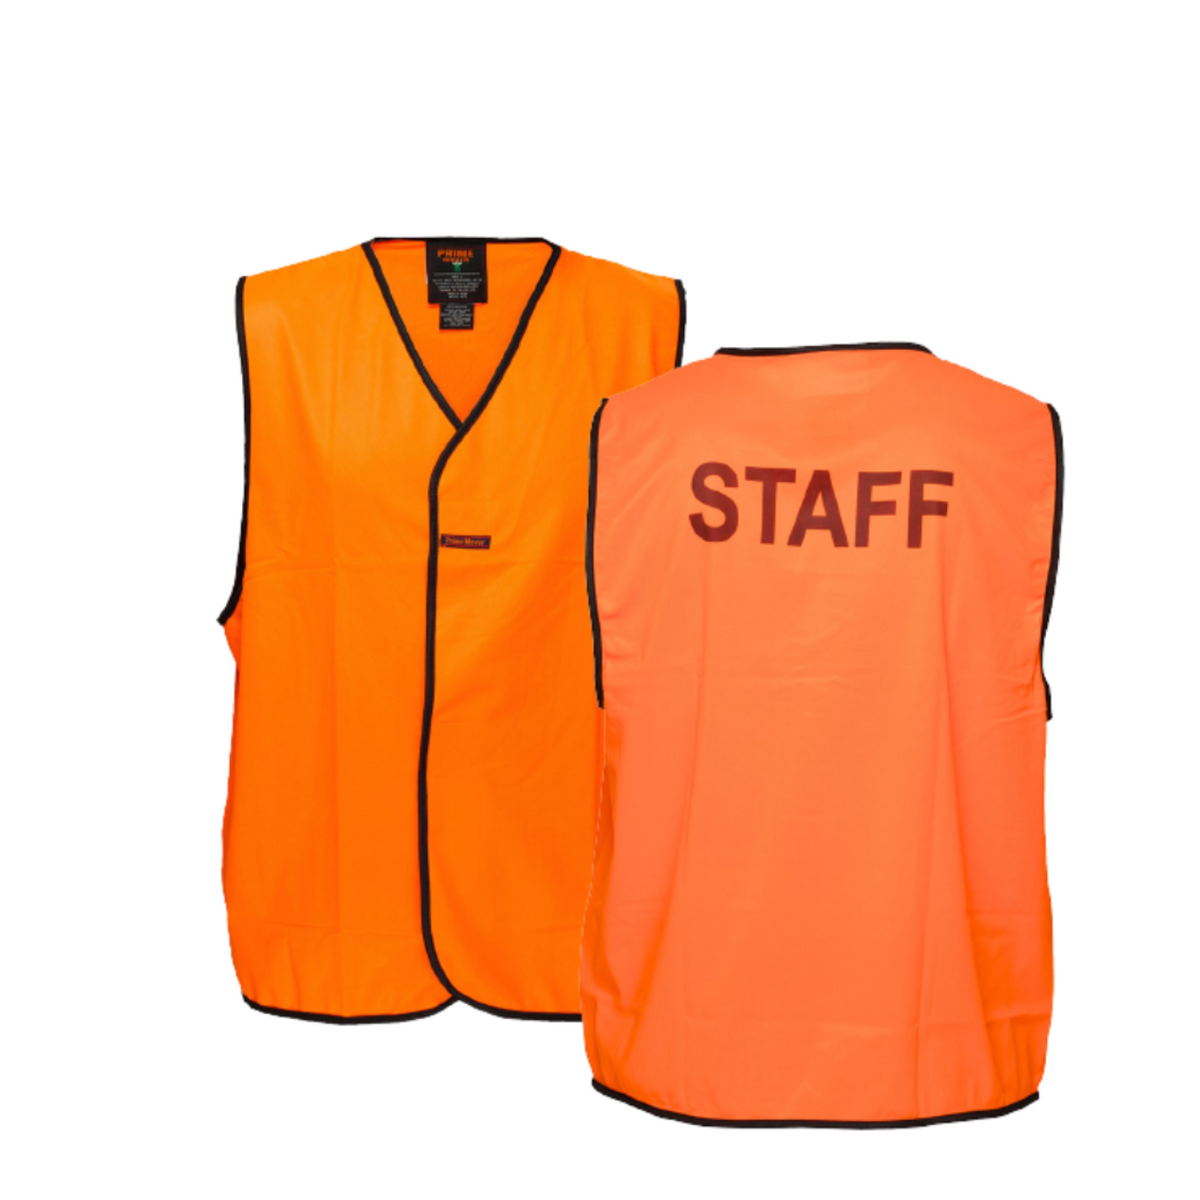 Portwest Staff Hi-Vis Vest Class D Touch Reflective Tape Work Safety MV121-Collins Clothing Co